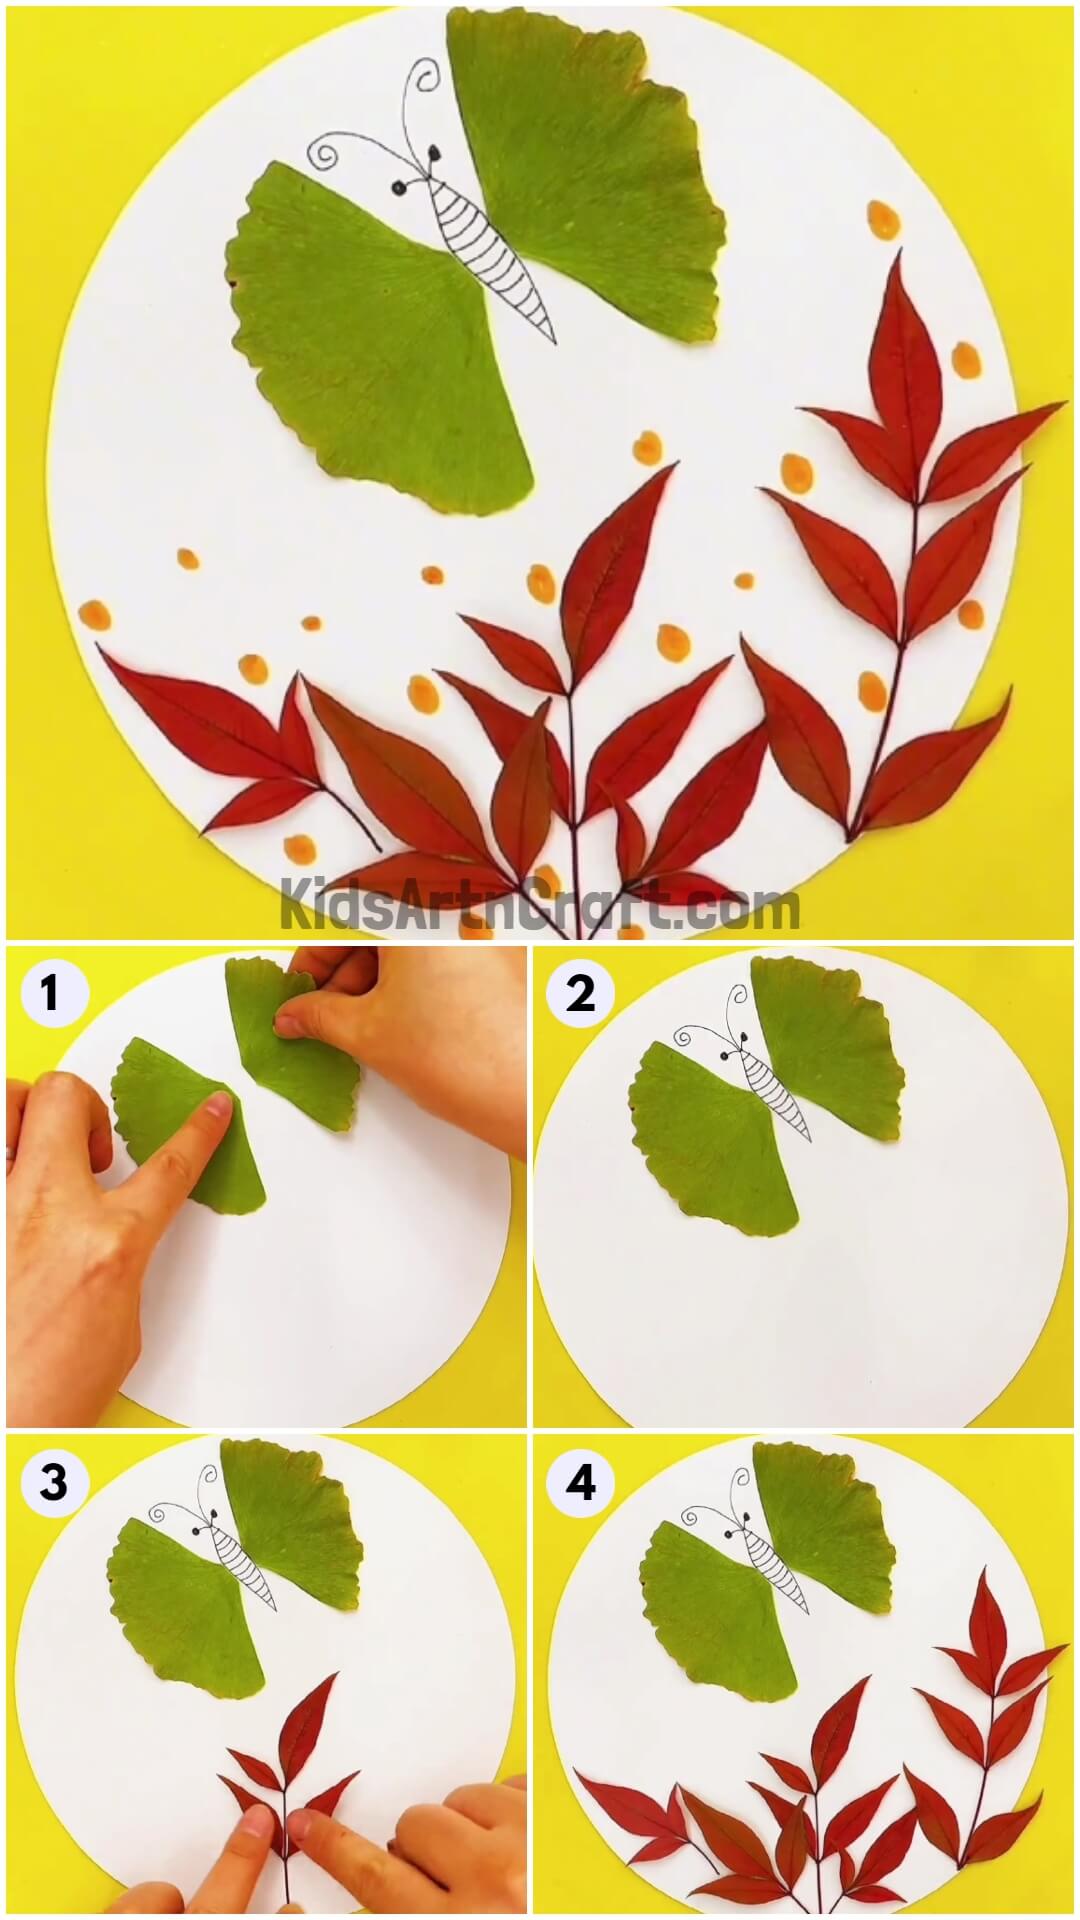 Leaf Garden Butterfly Craft Idea For Beginners- Crafting a leafy garden butterfly for novices